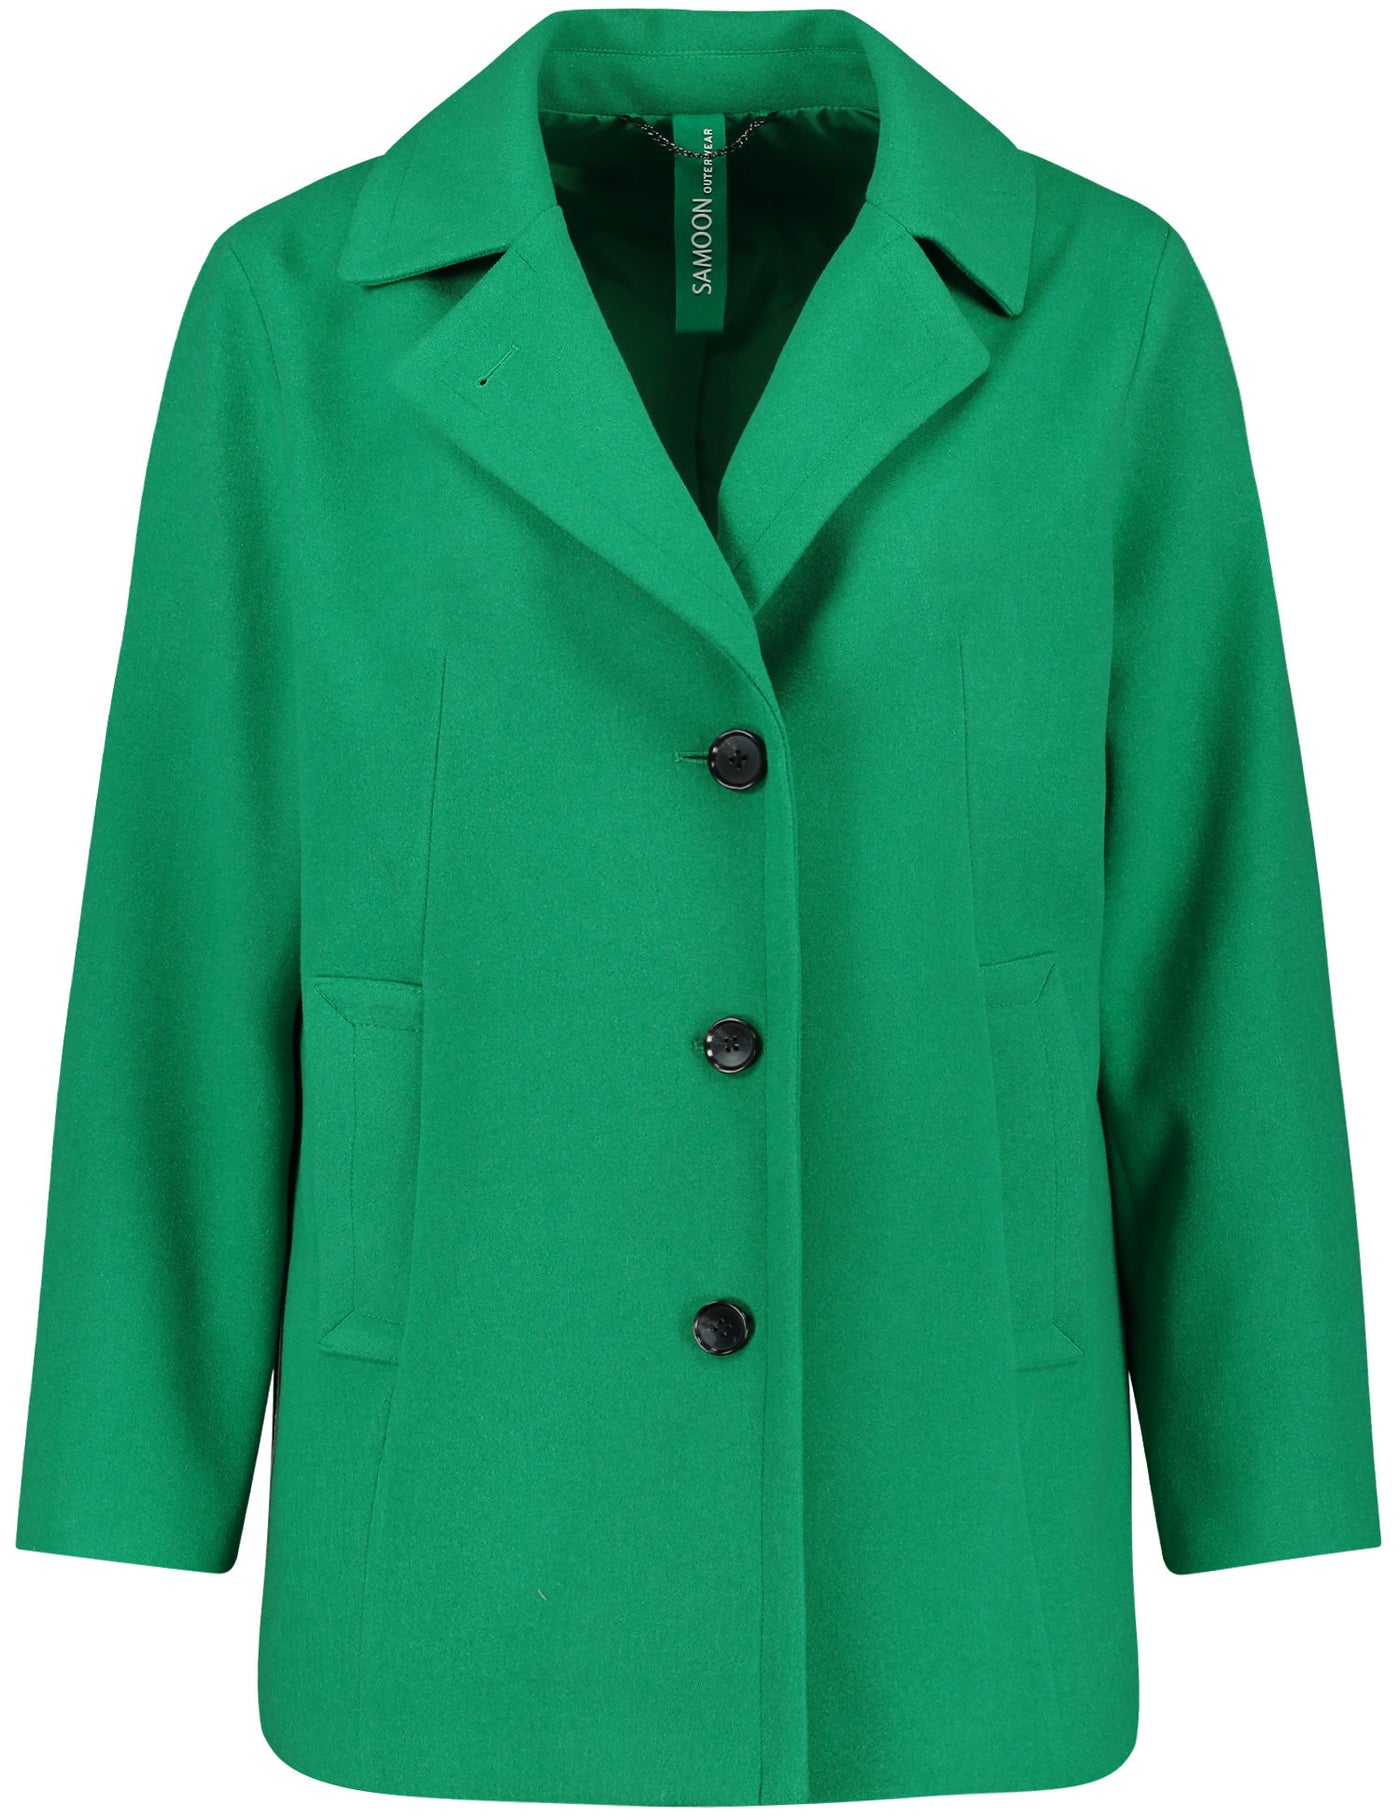 Samoon Notch Collar Pea Coat in Green